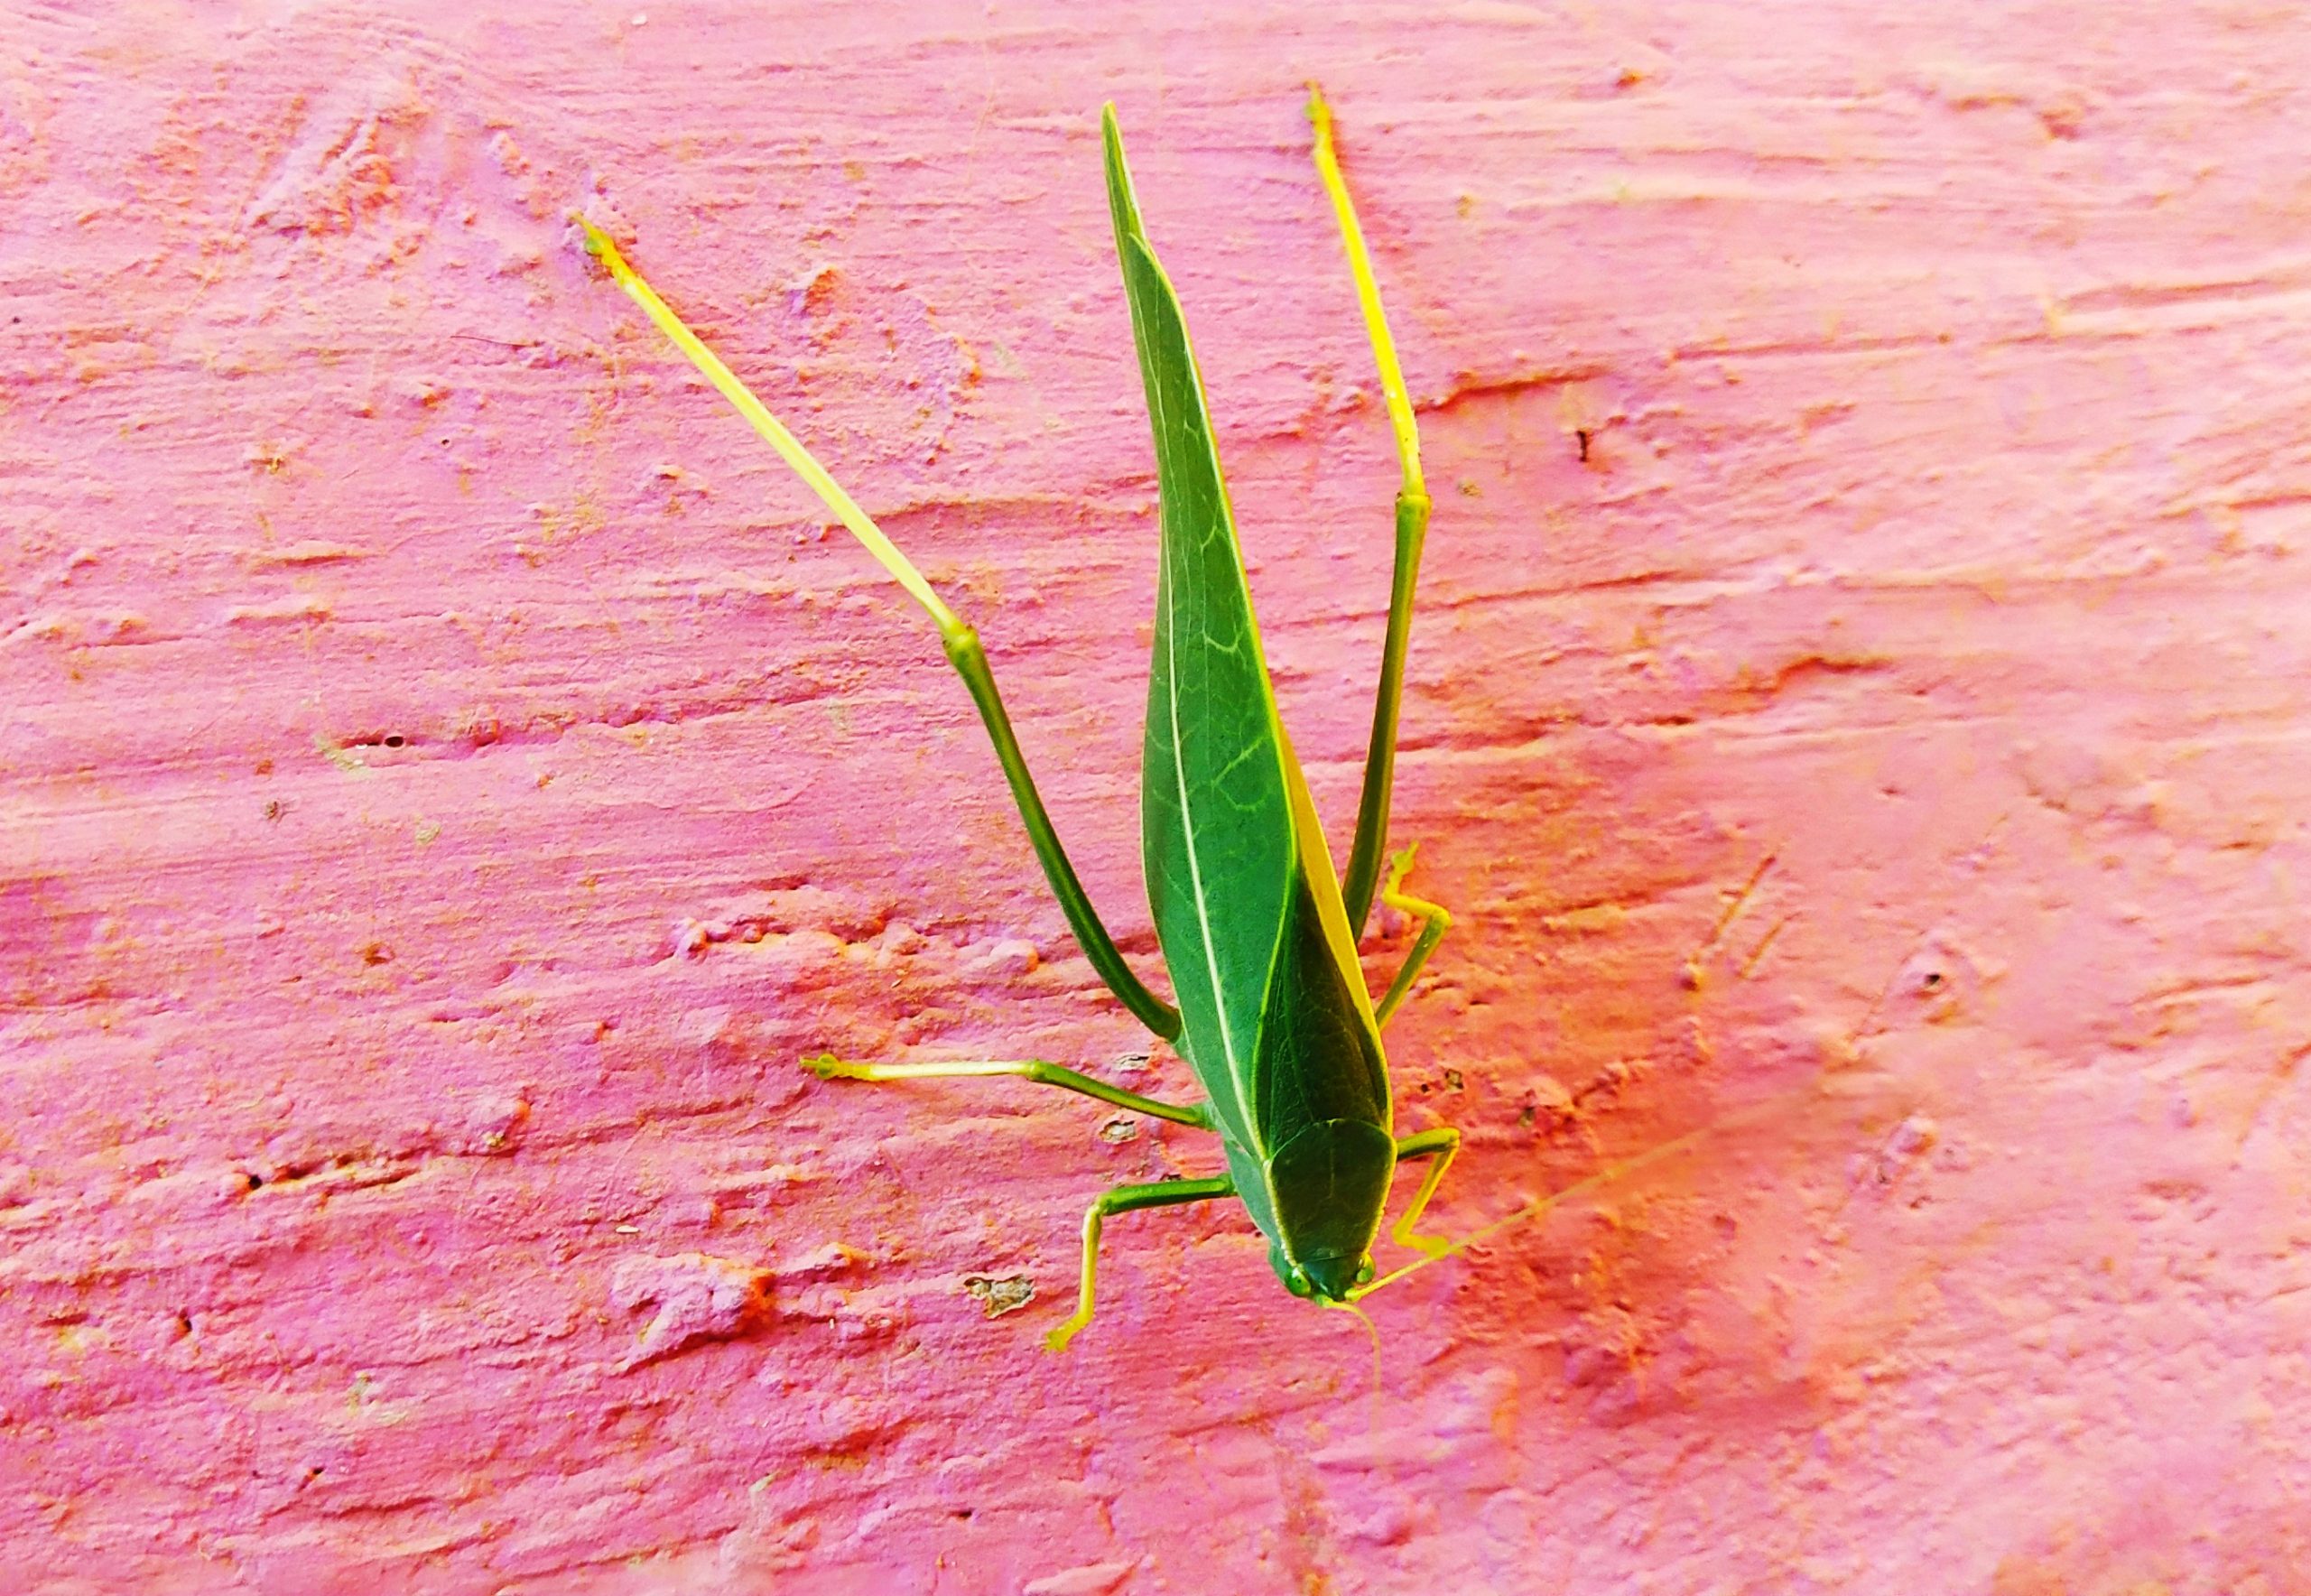 A Broad winged katydid